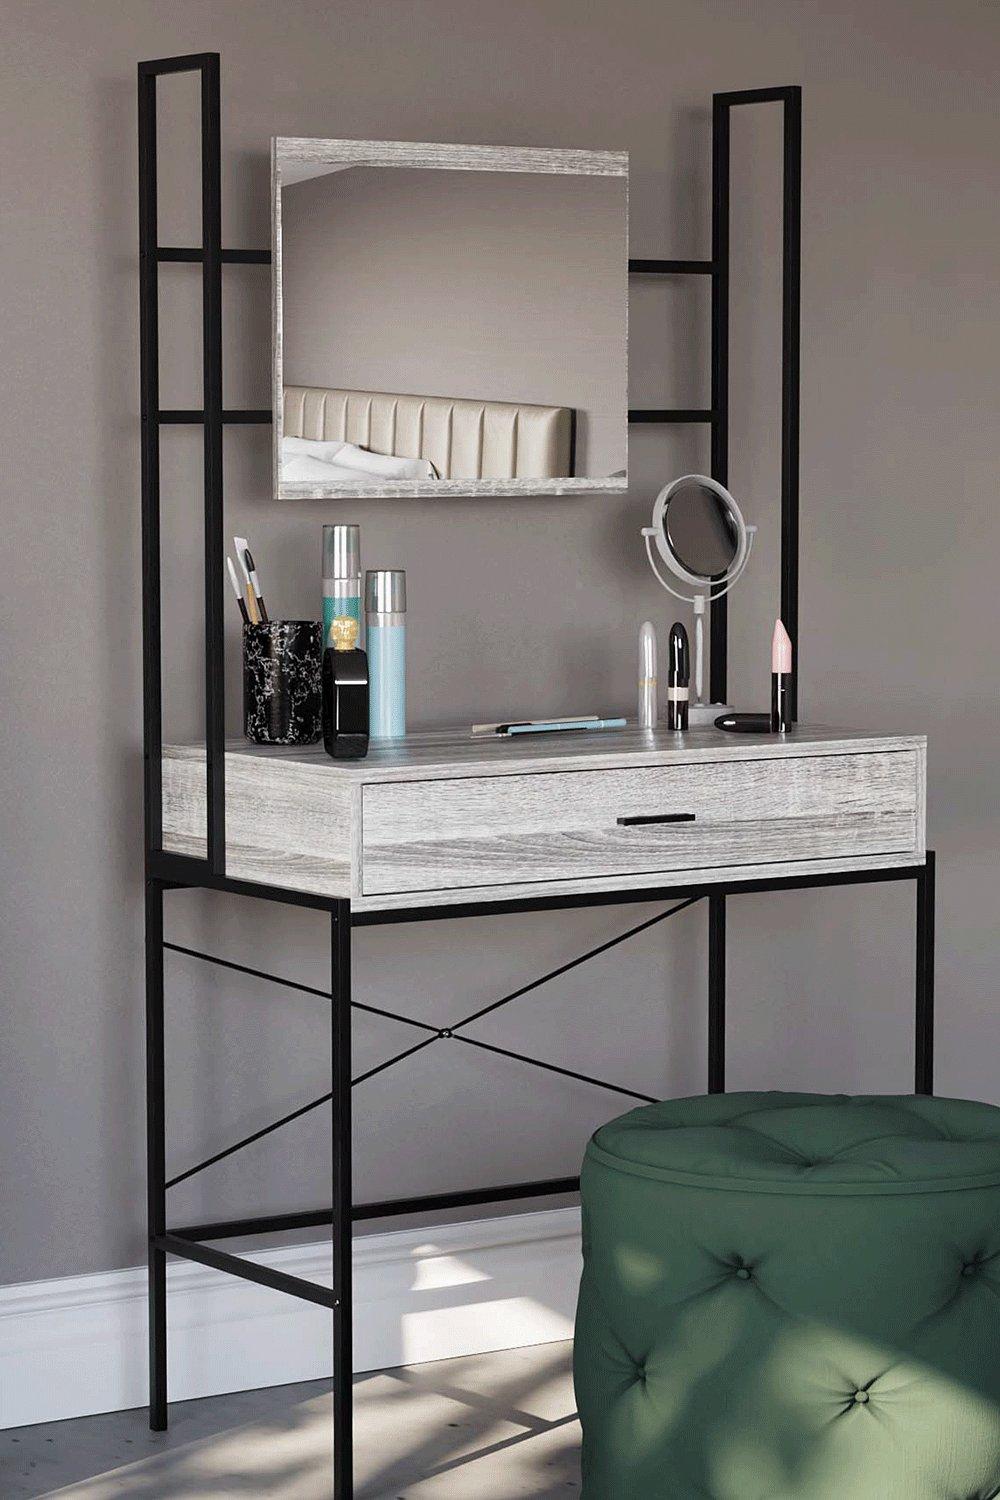 Vida Designs Brooklyn 1 Drawer Dressing Table with Built-in Mirror Storage